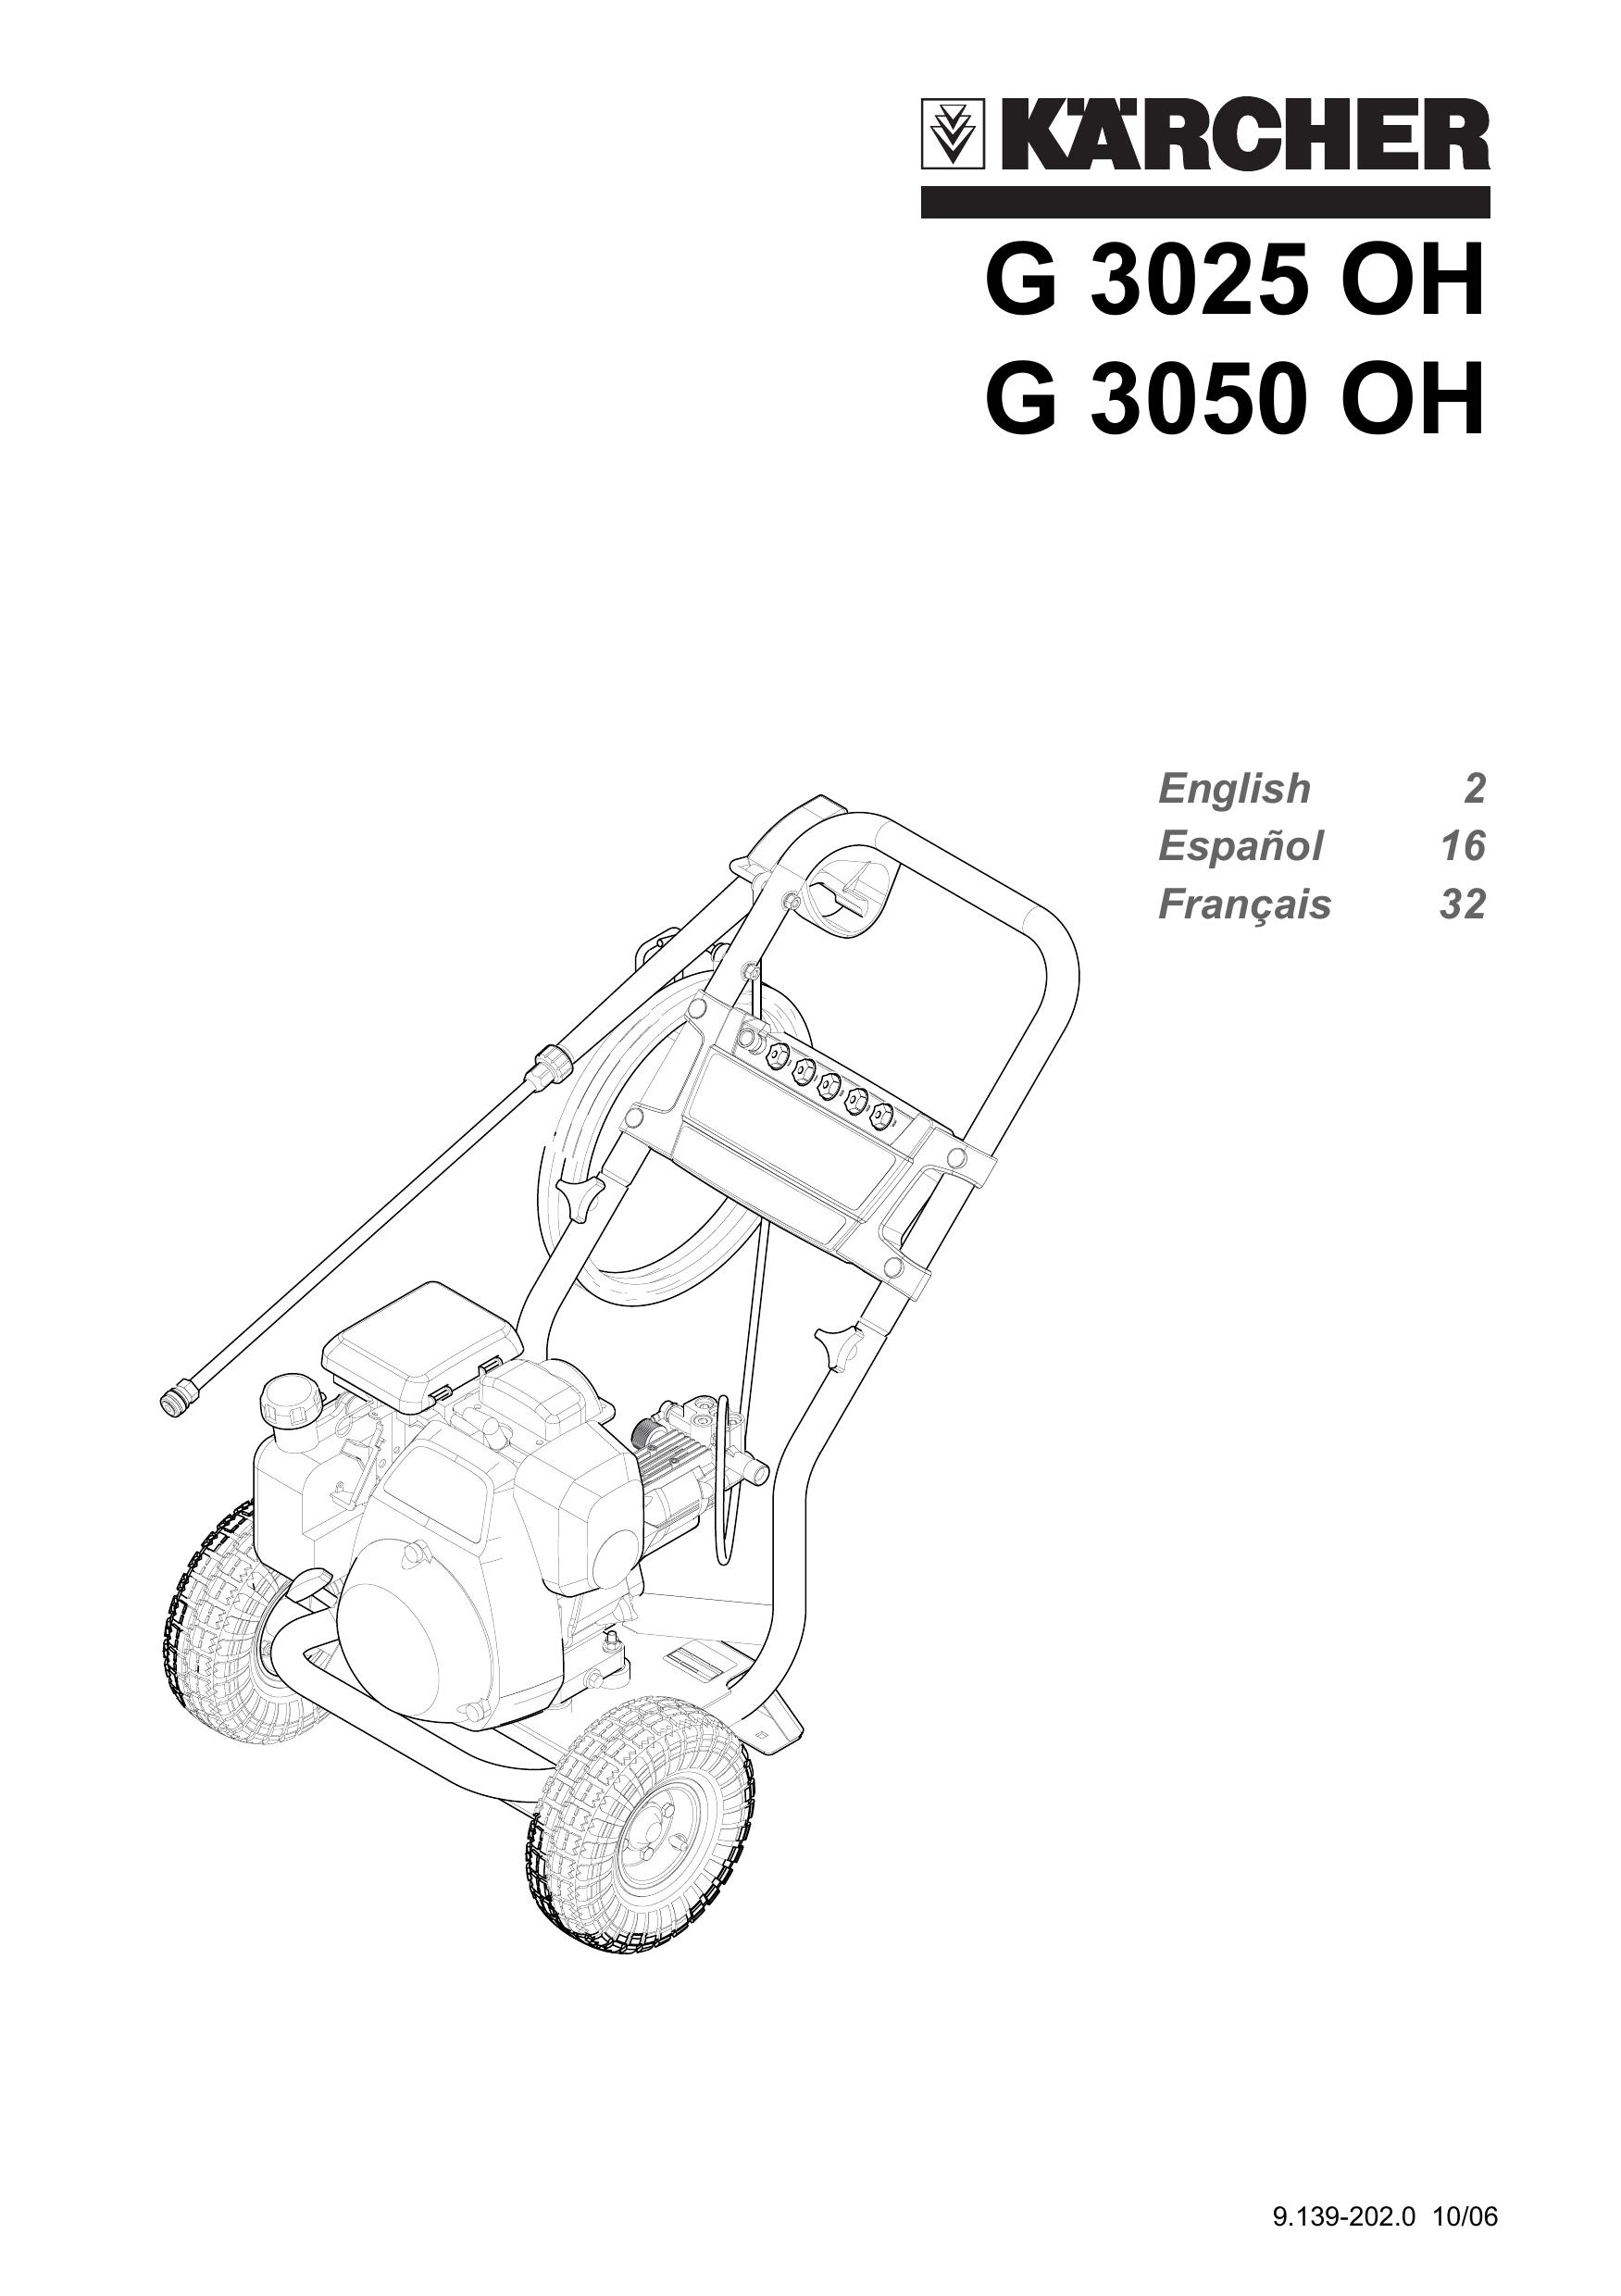 Karcher G 3025 OH Pressure Washer User Manual